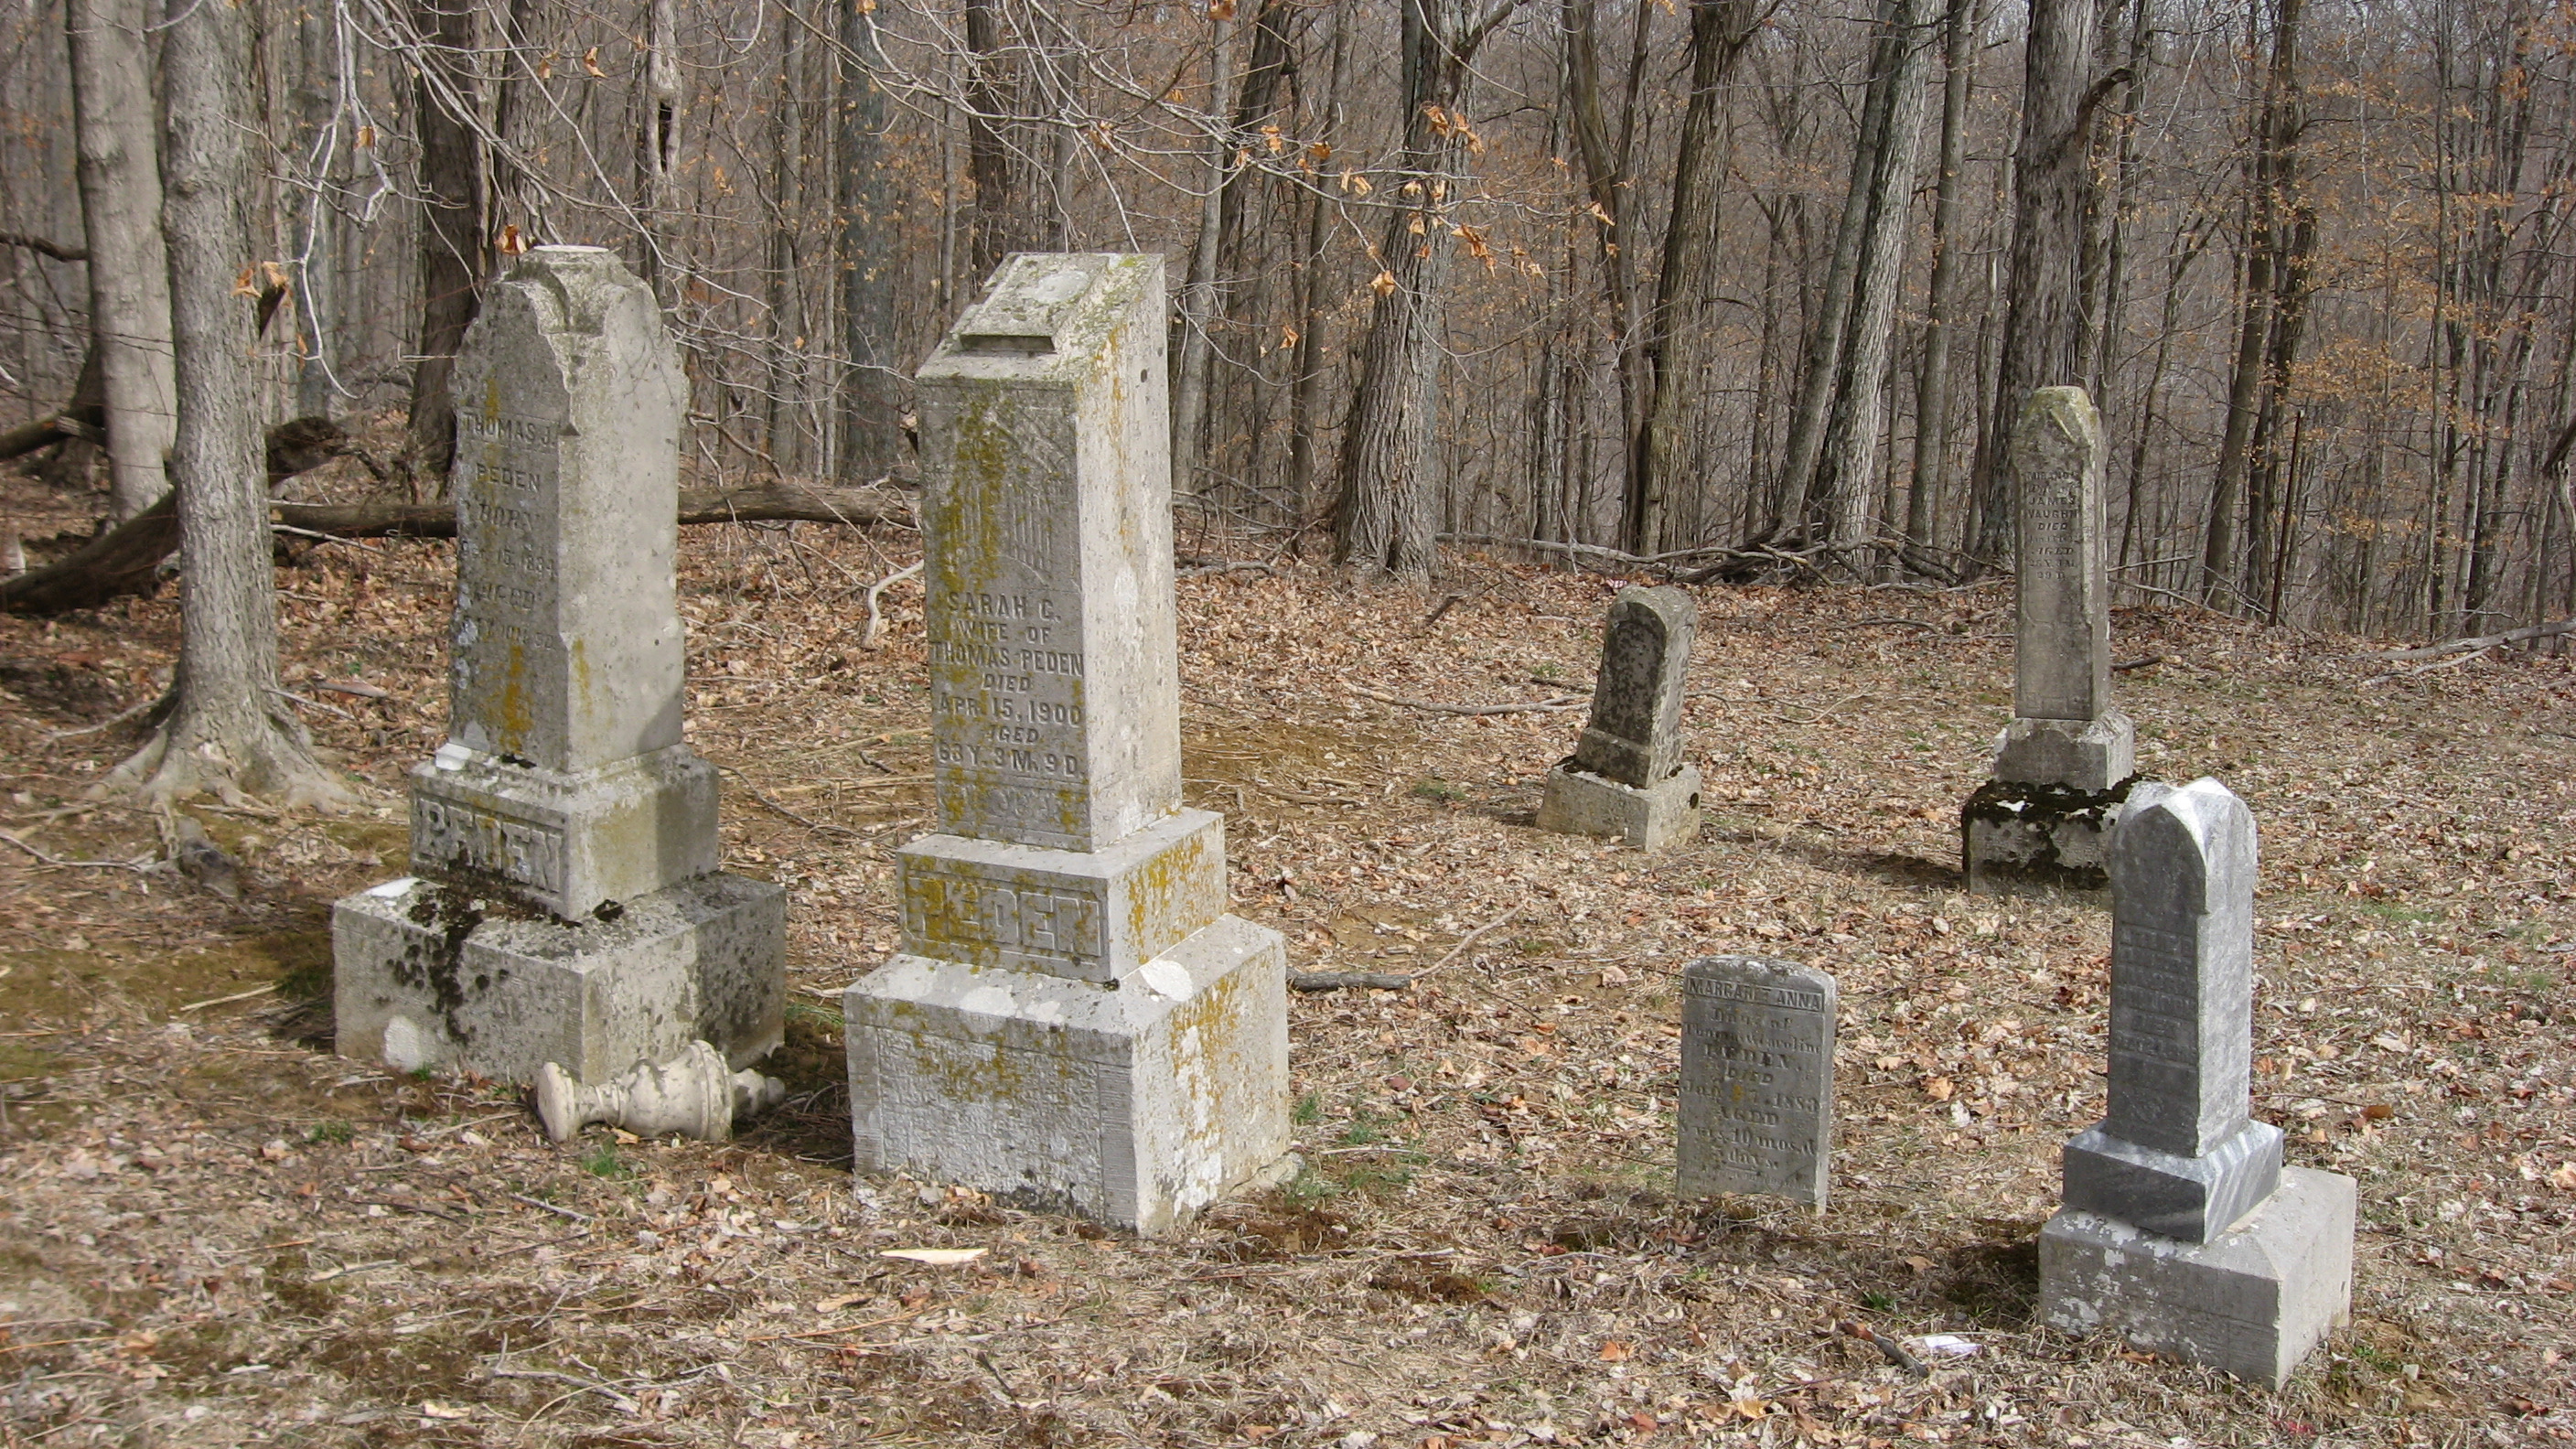 File:Old stones on Walnut Ridge.jpg - Wikimedia Commons